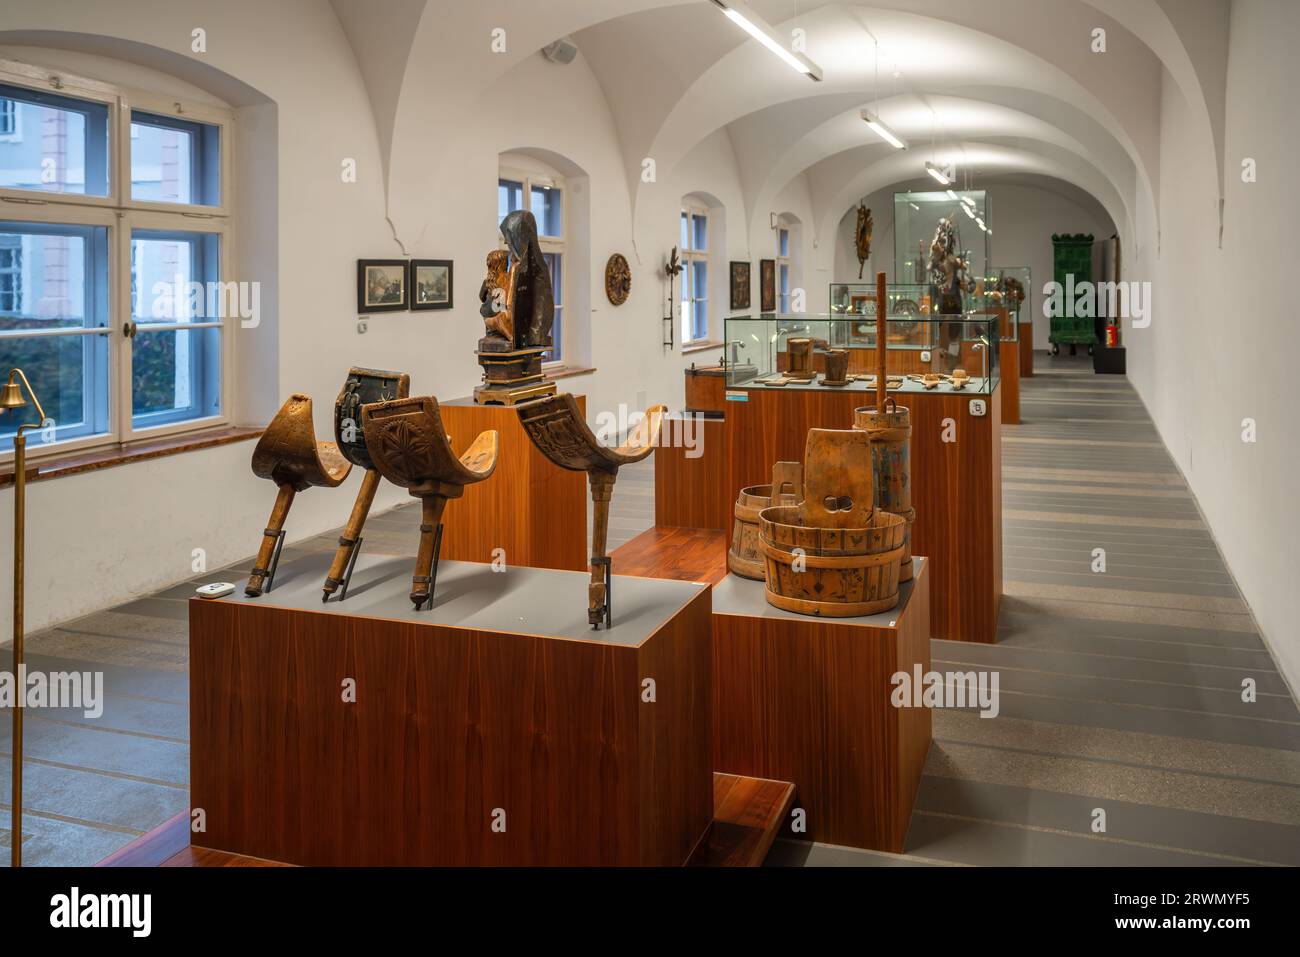 Interno del Museo d'Arte Folcloristica tirolese - Innsbruck, Austria Foto Stock